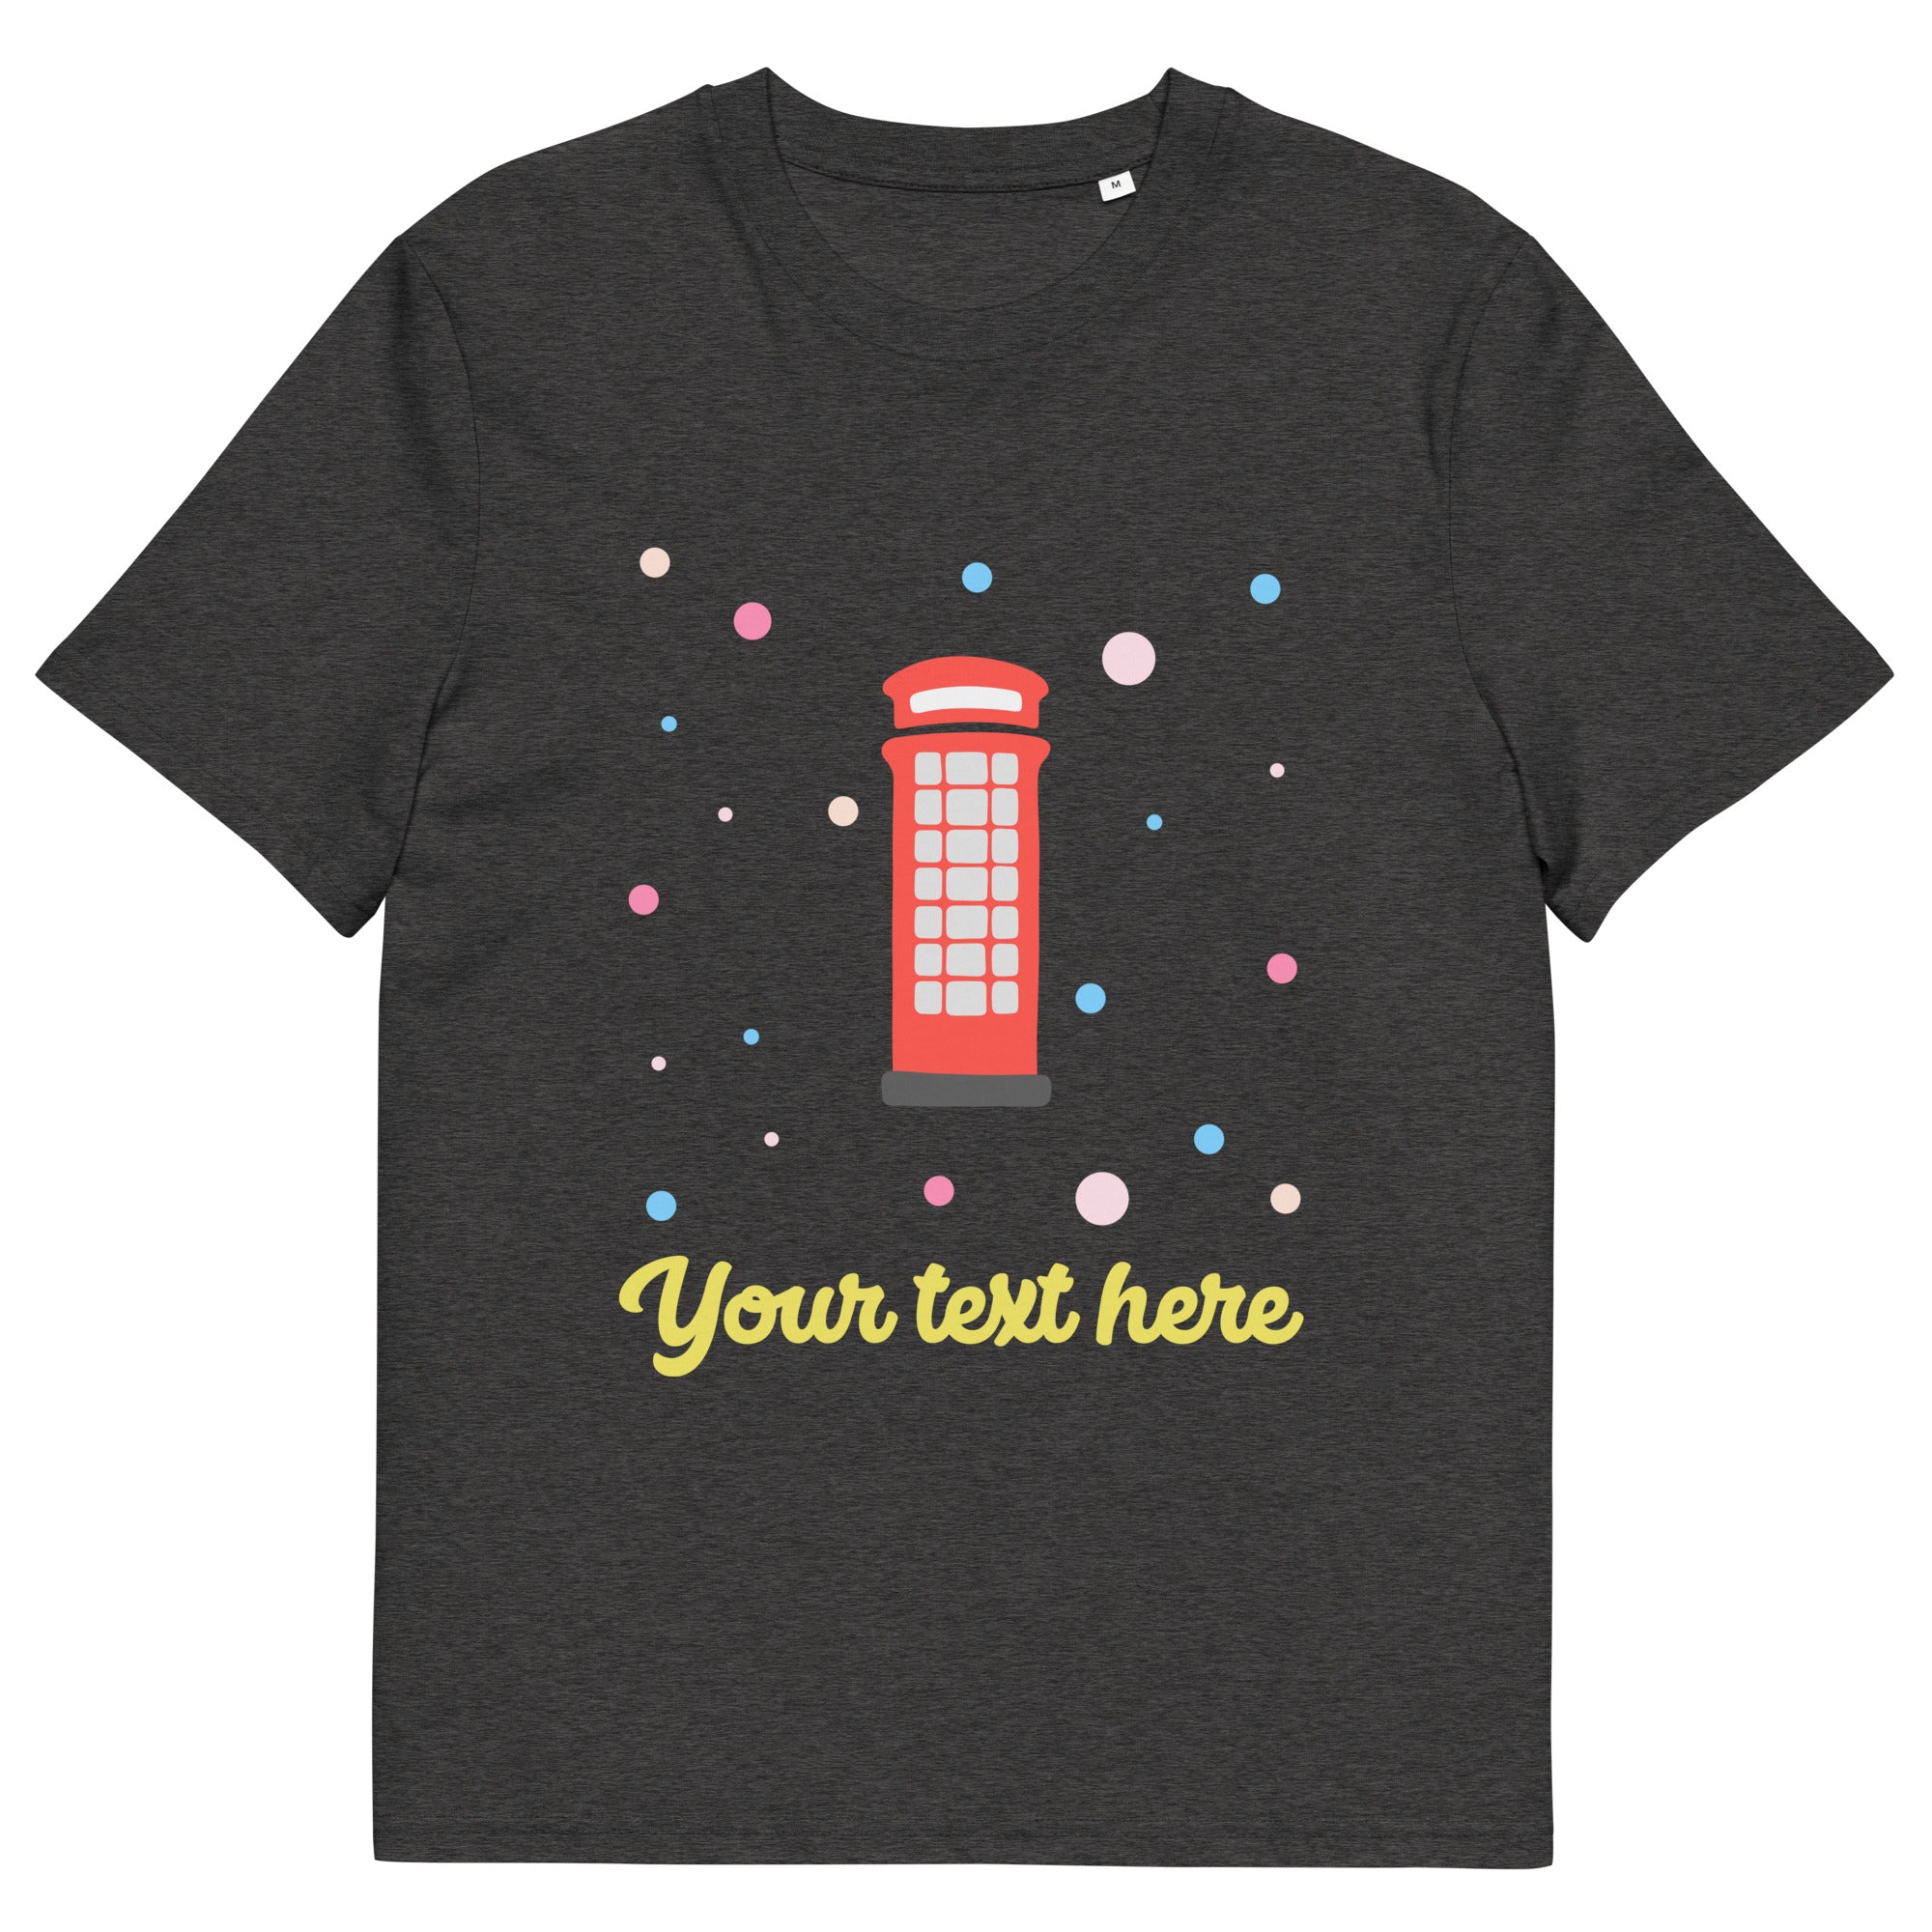 Personalised Custom Text - Organic Cotton Adults Unisex T-Shirt - London Doodles - Telephone Box - Dark Grey